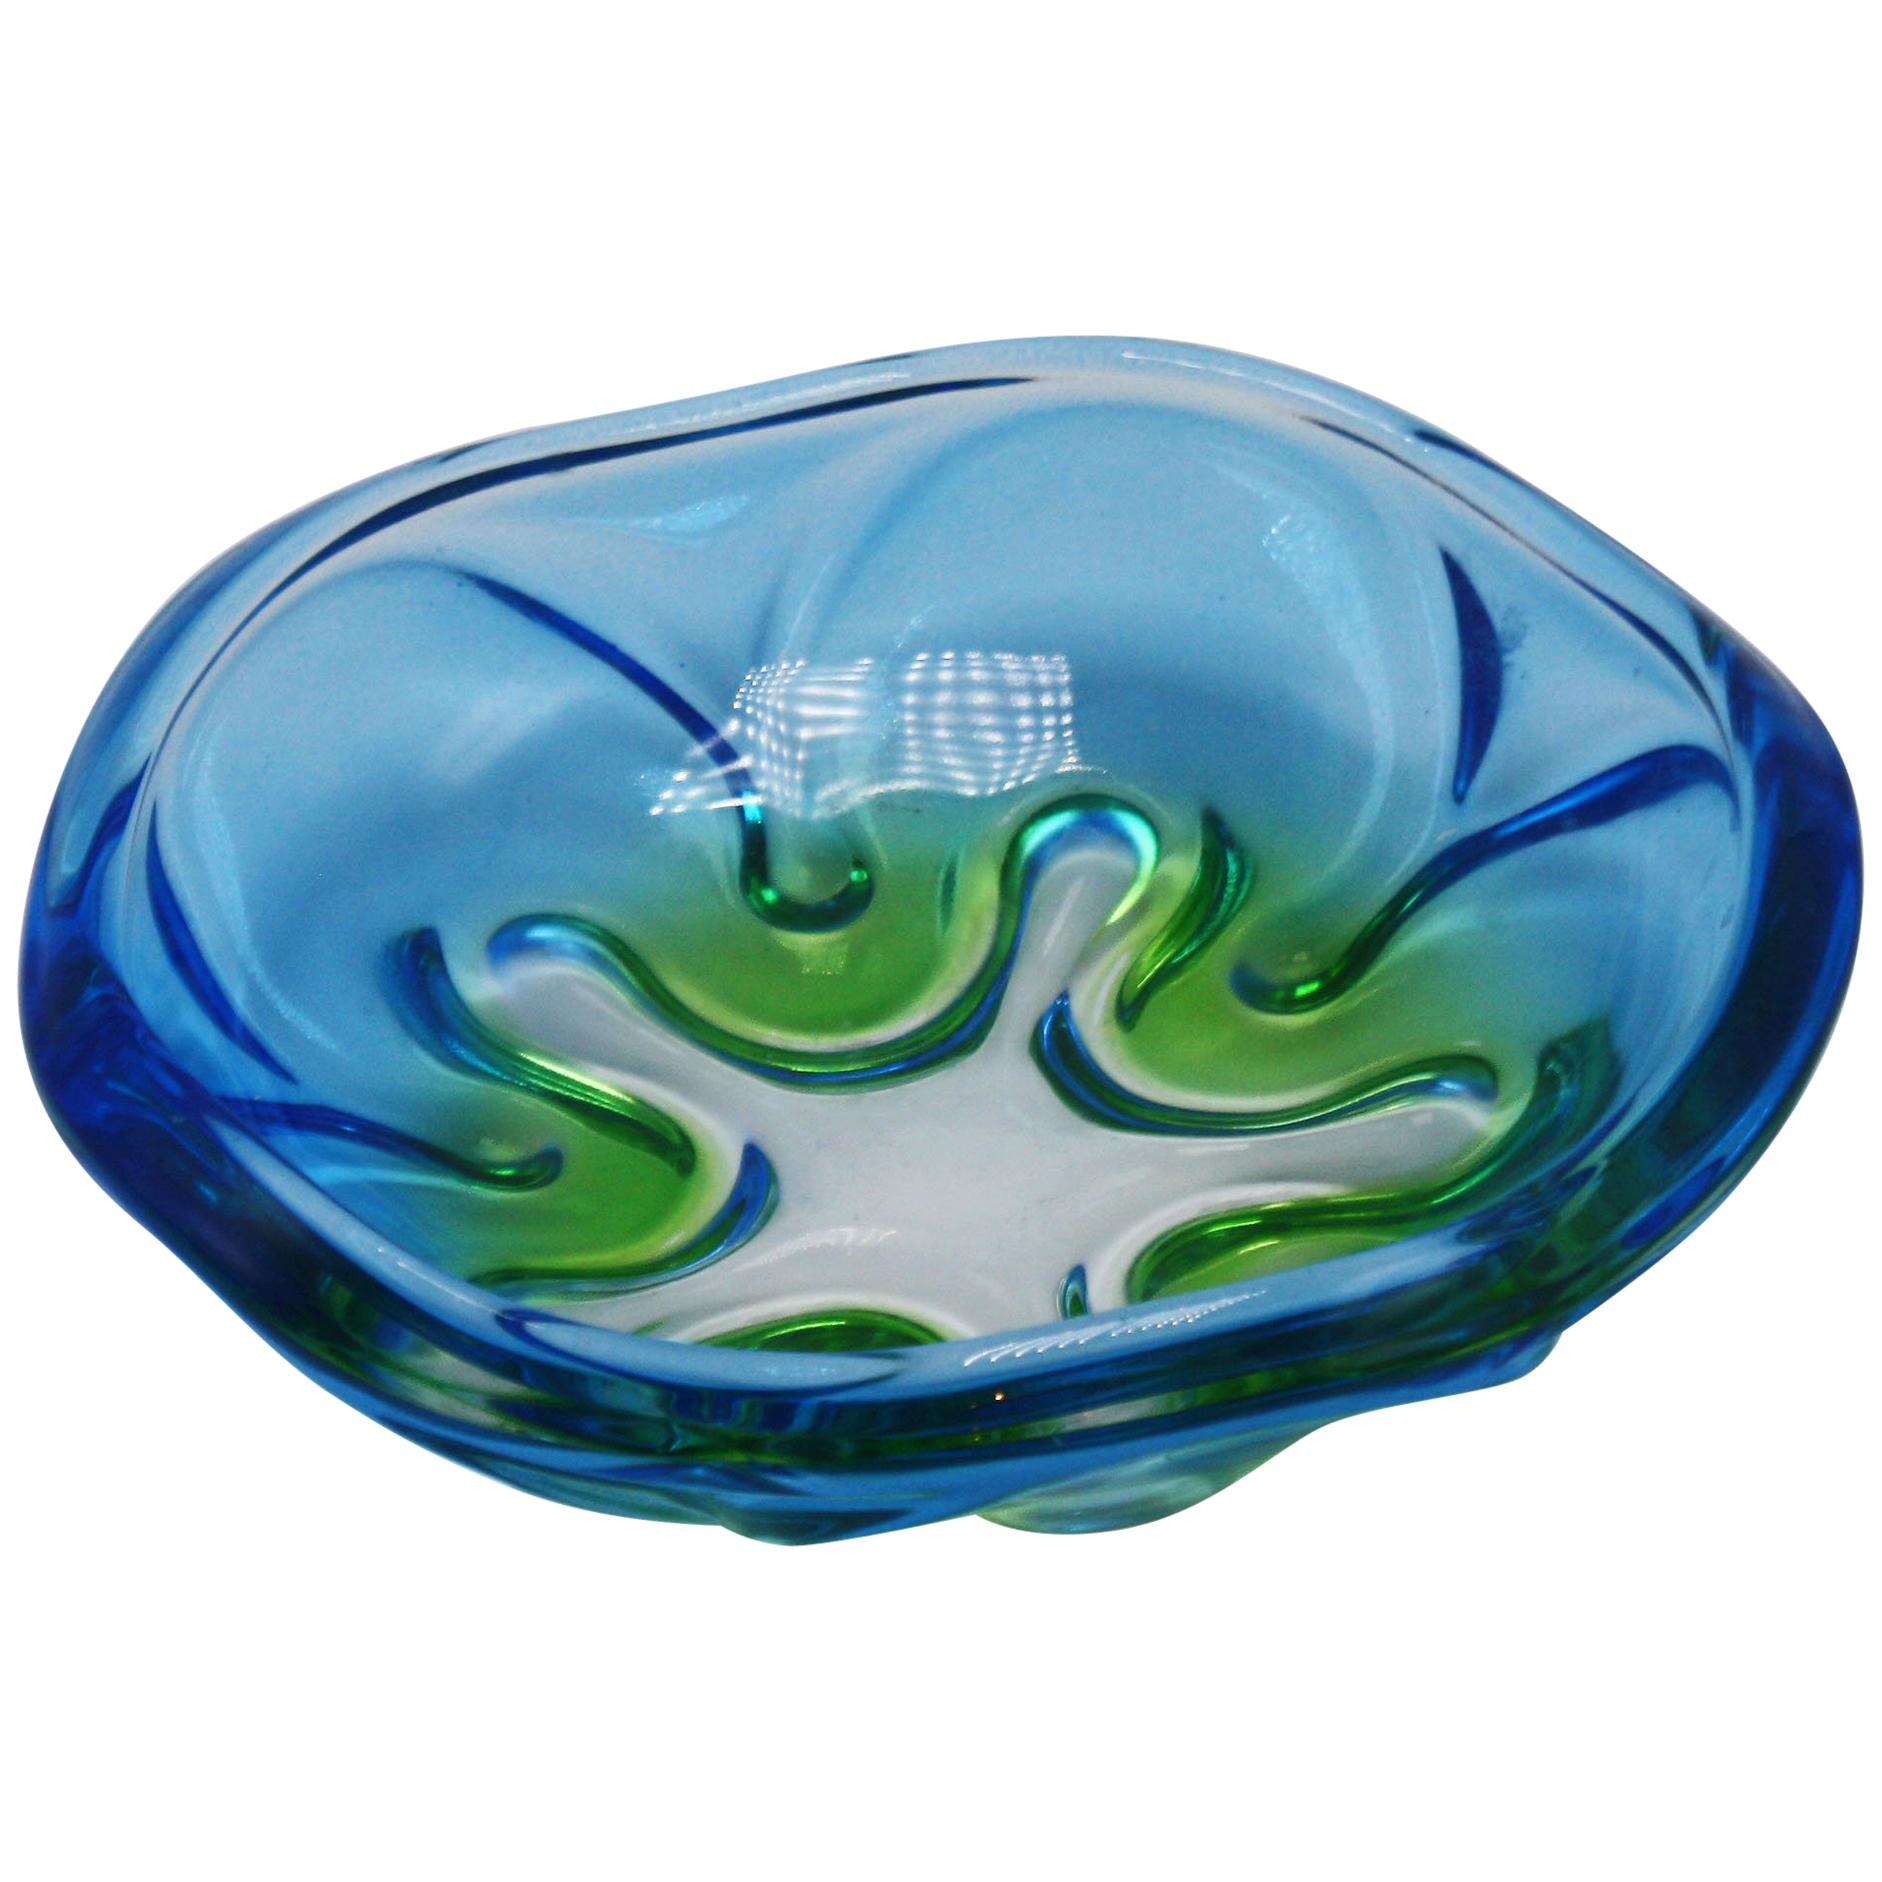 Blue and Green Murano Glass Bowl, circa 1970